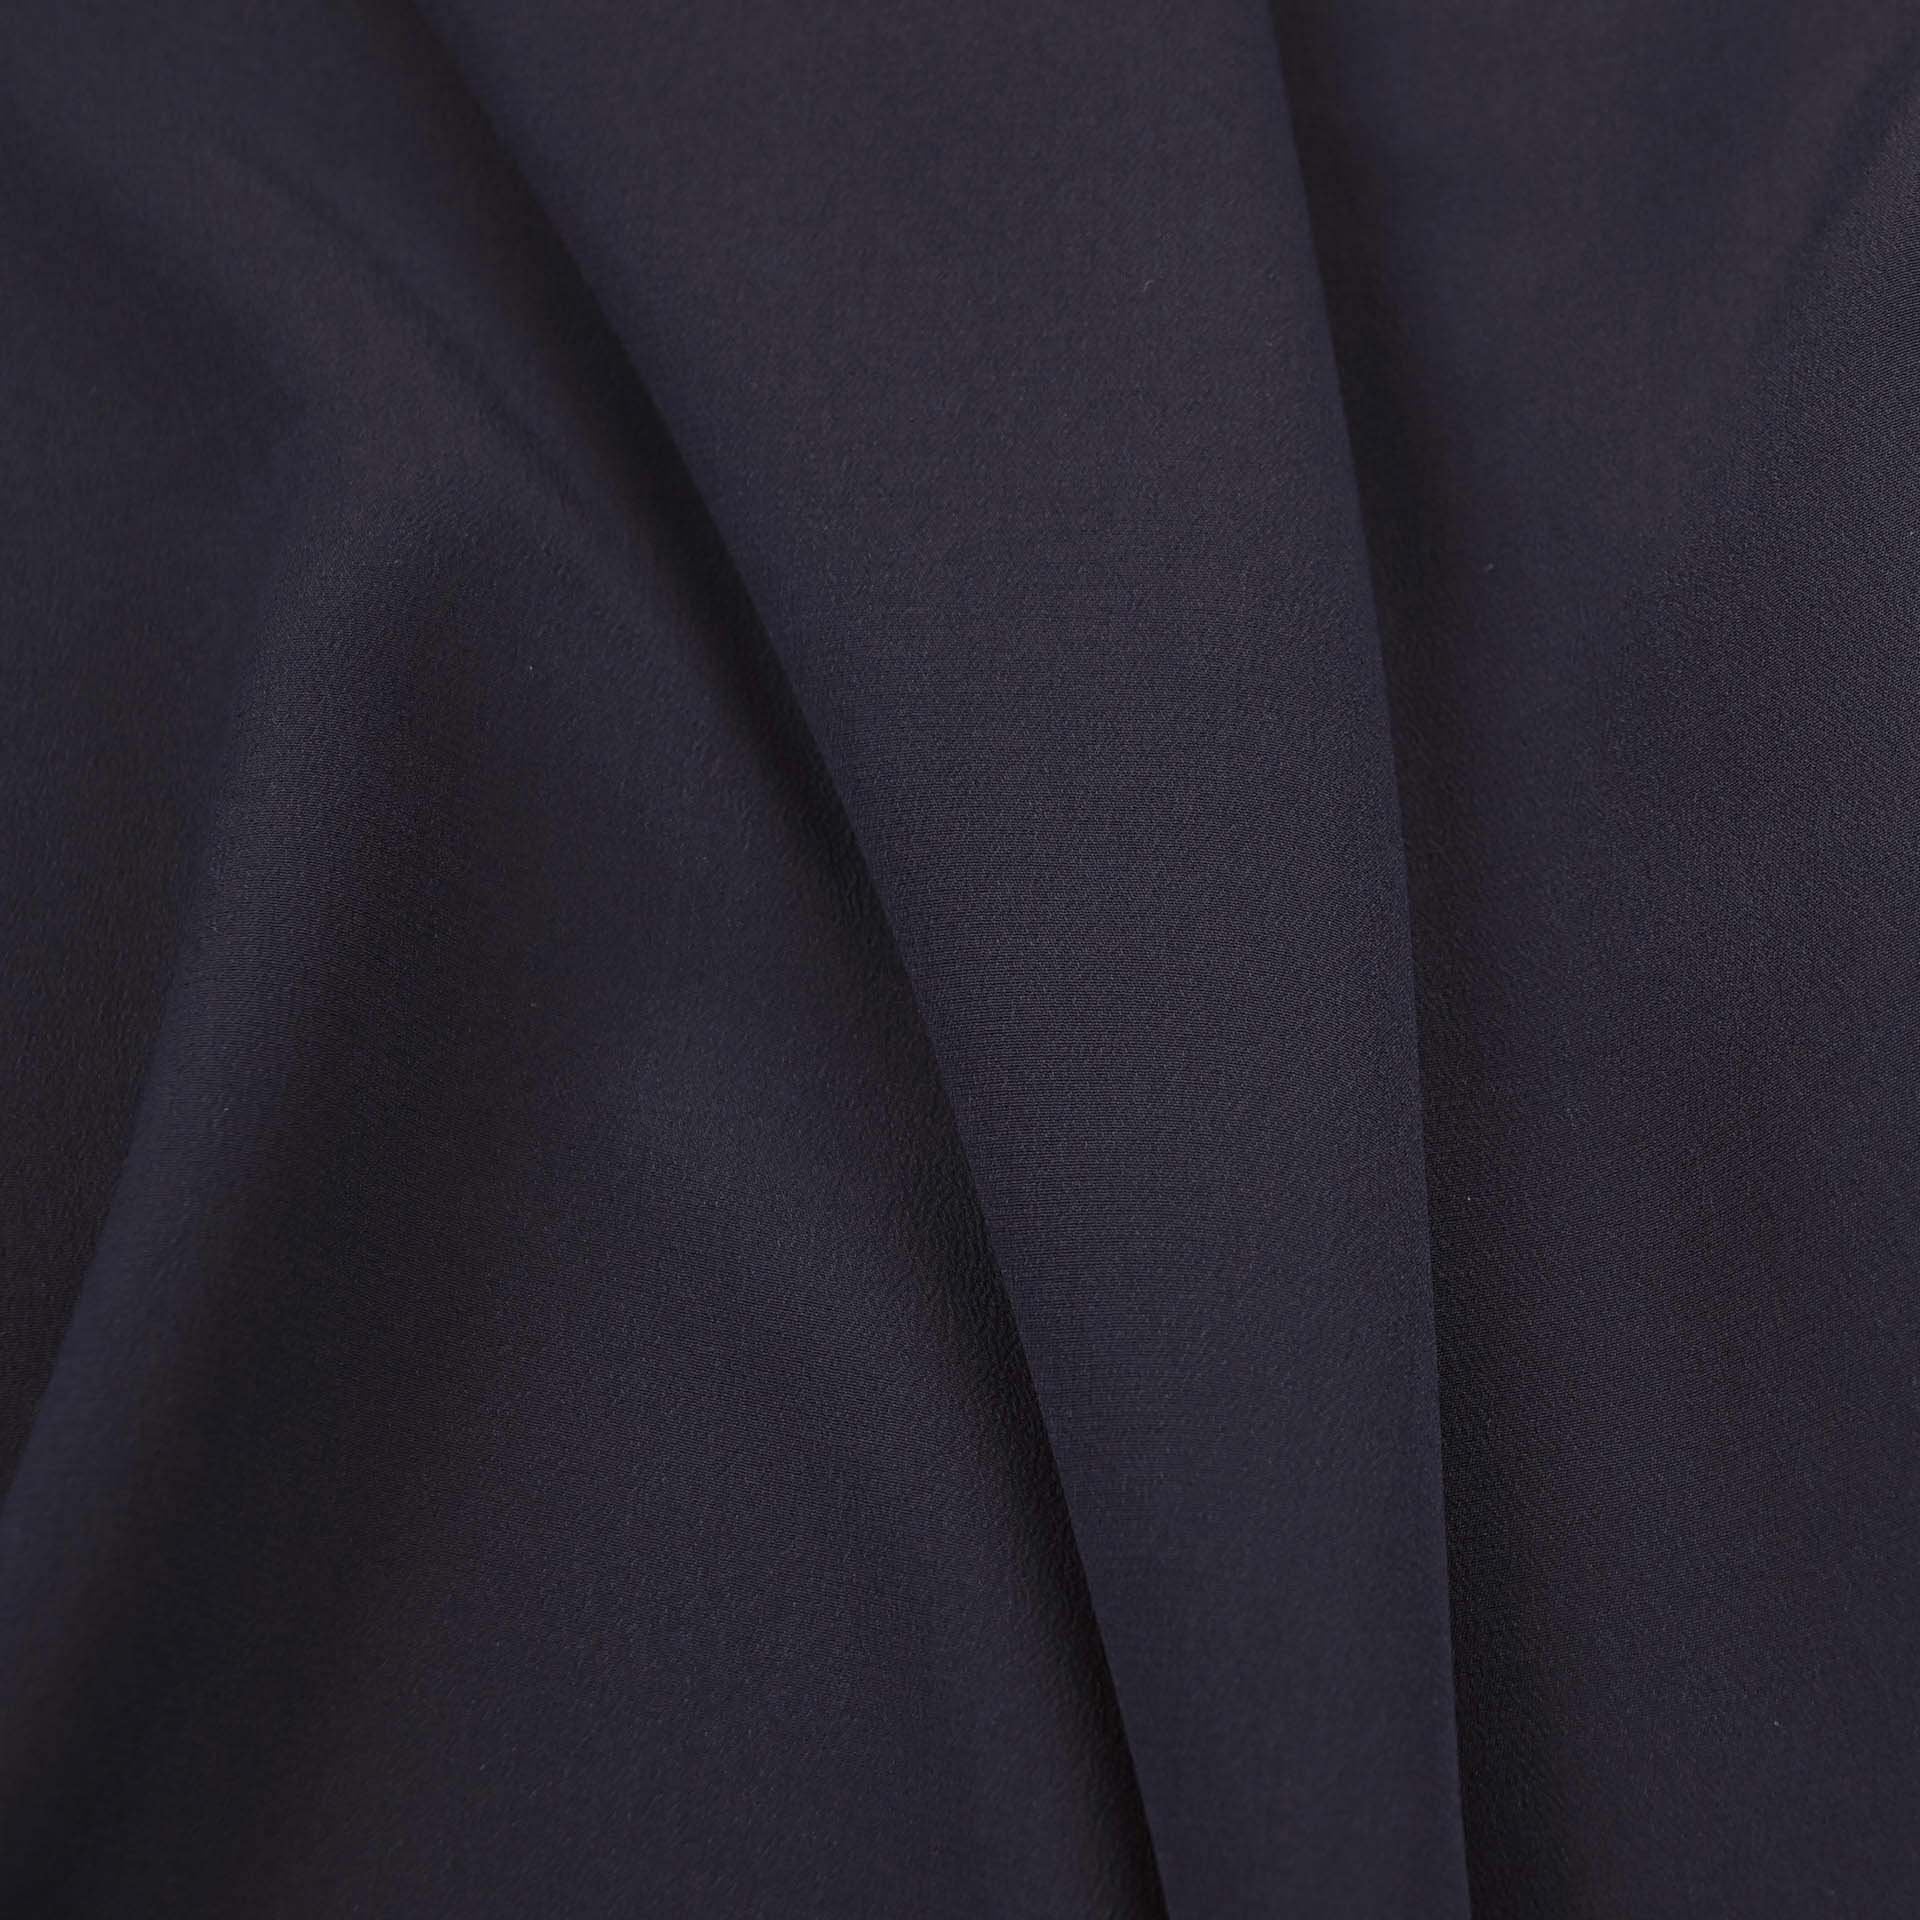 Midnight Chiffon Silk Fabric 98881